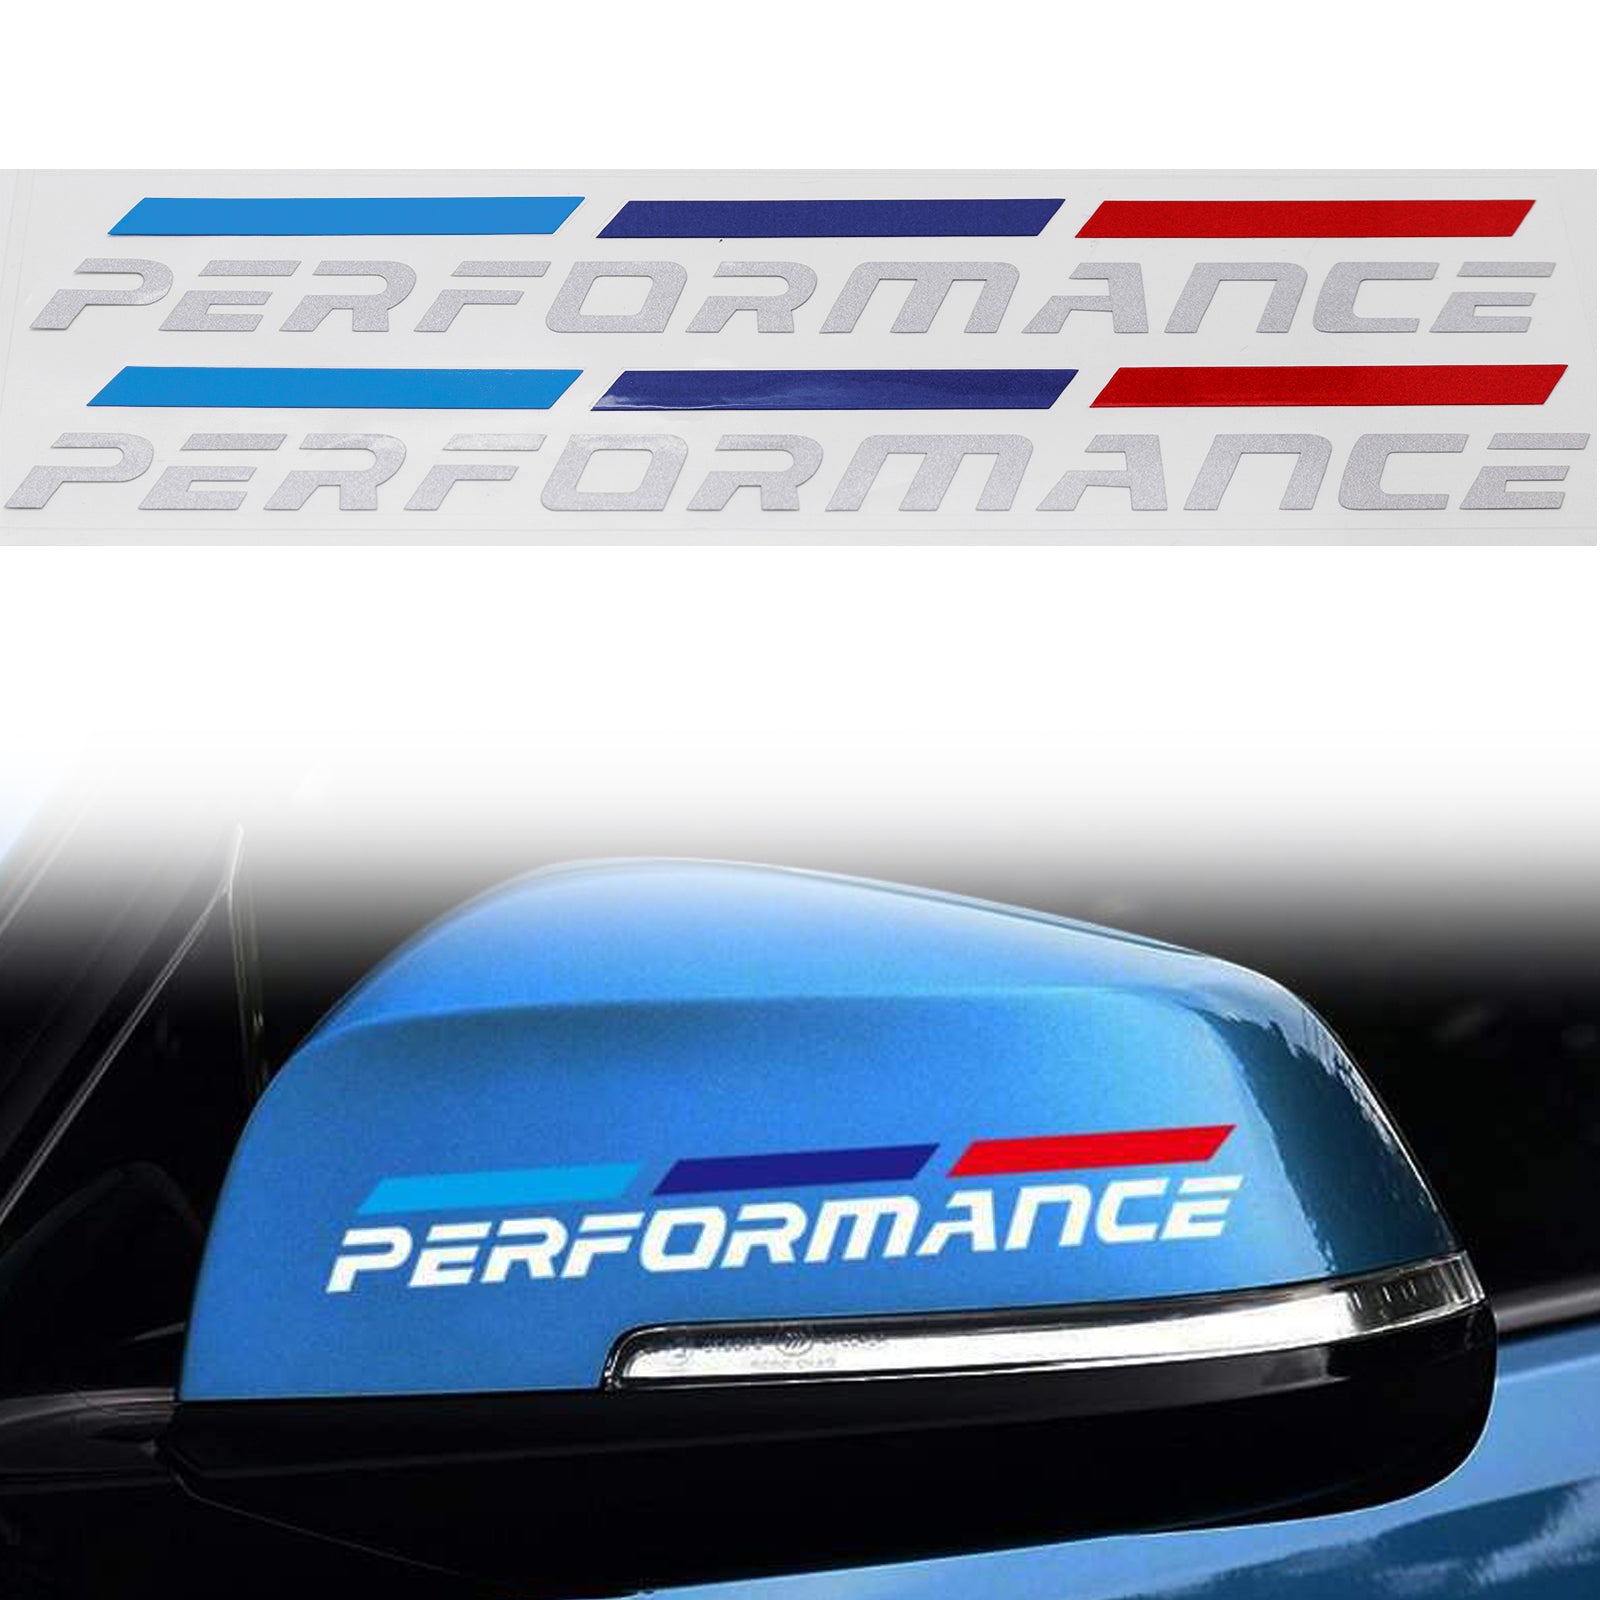 2pcs for BMW Decoration Sticker - M-color Tricolor Sporty Stripe with